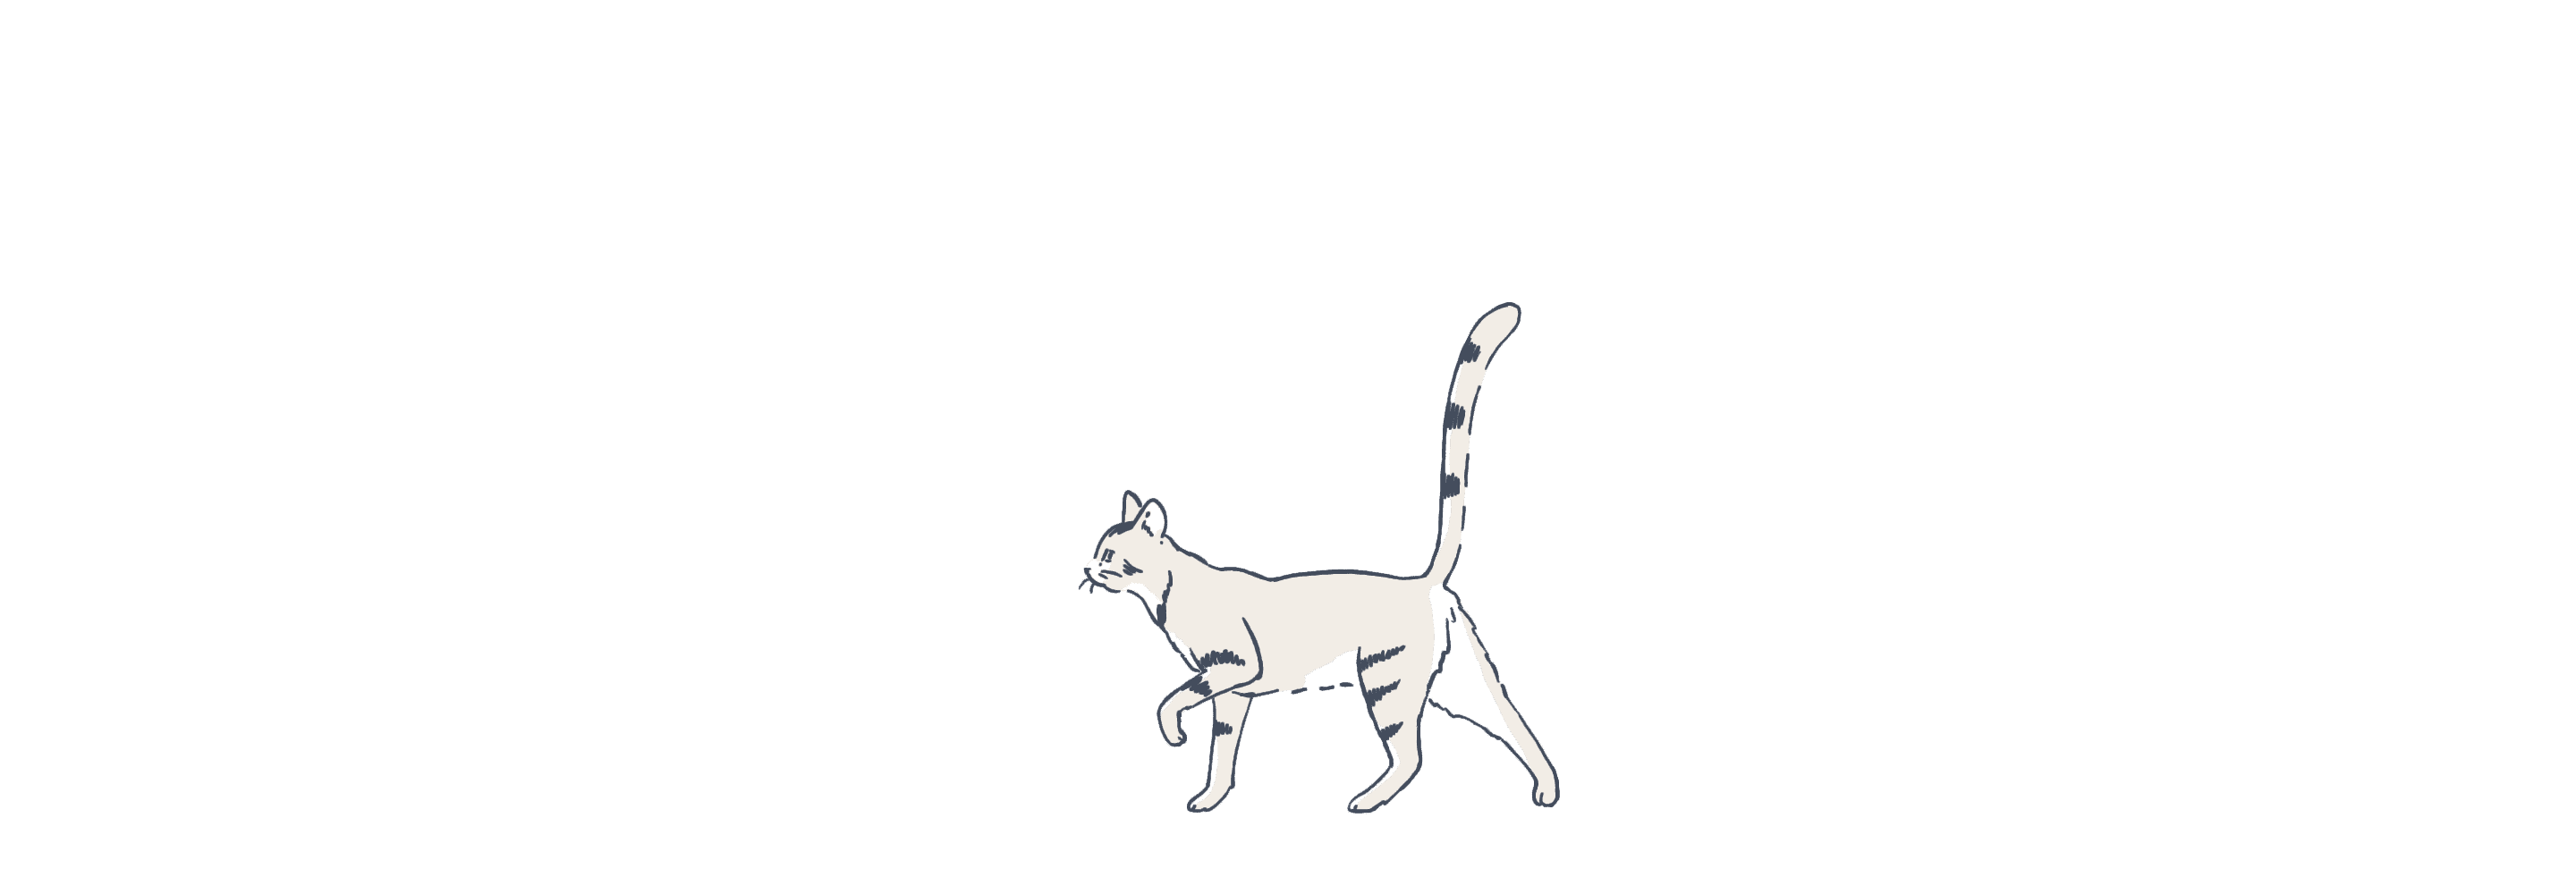 Cat illustration animated